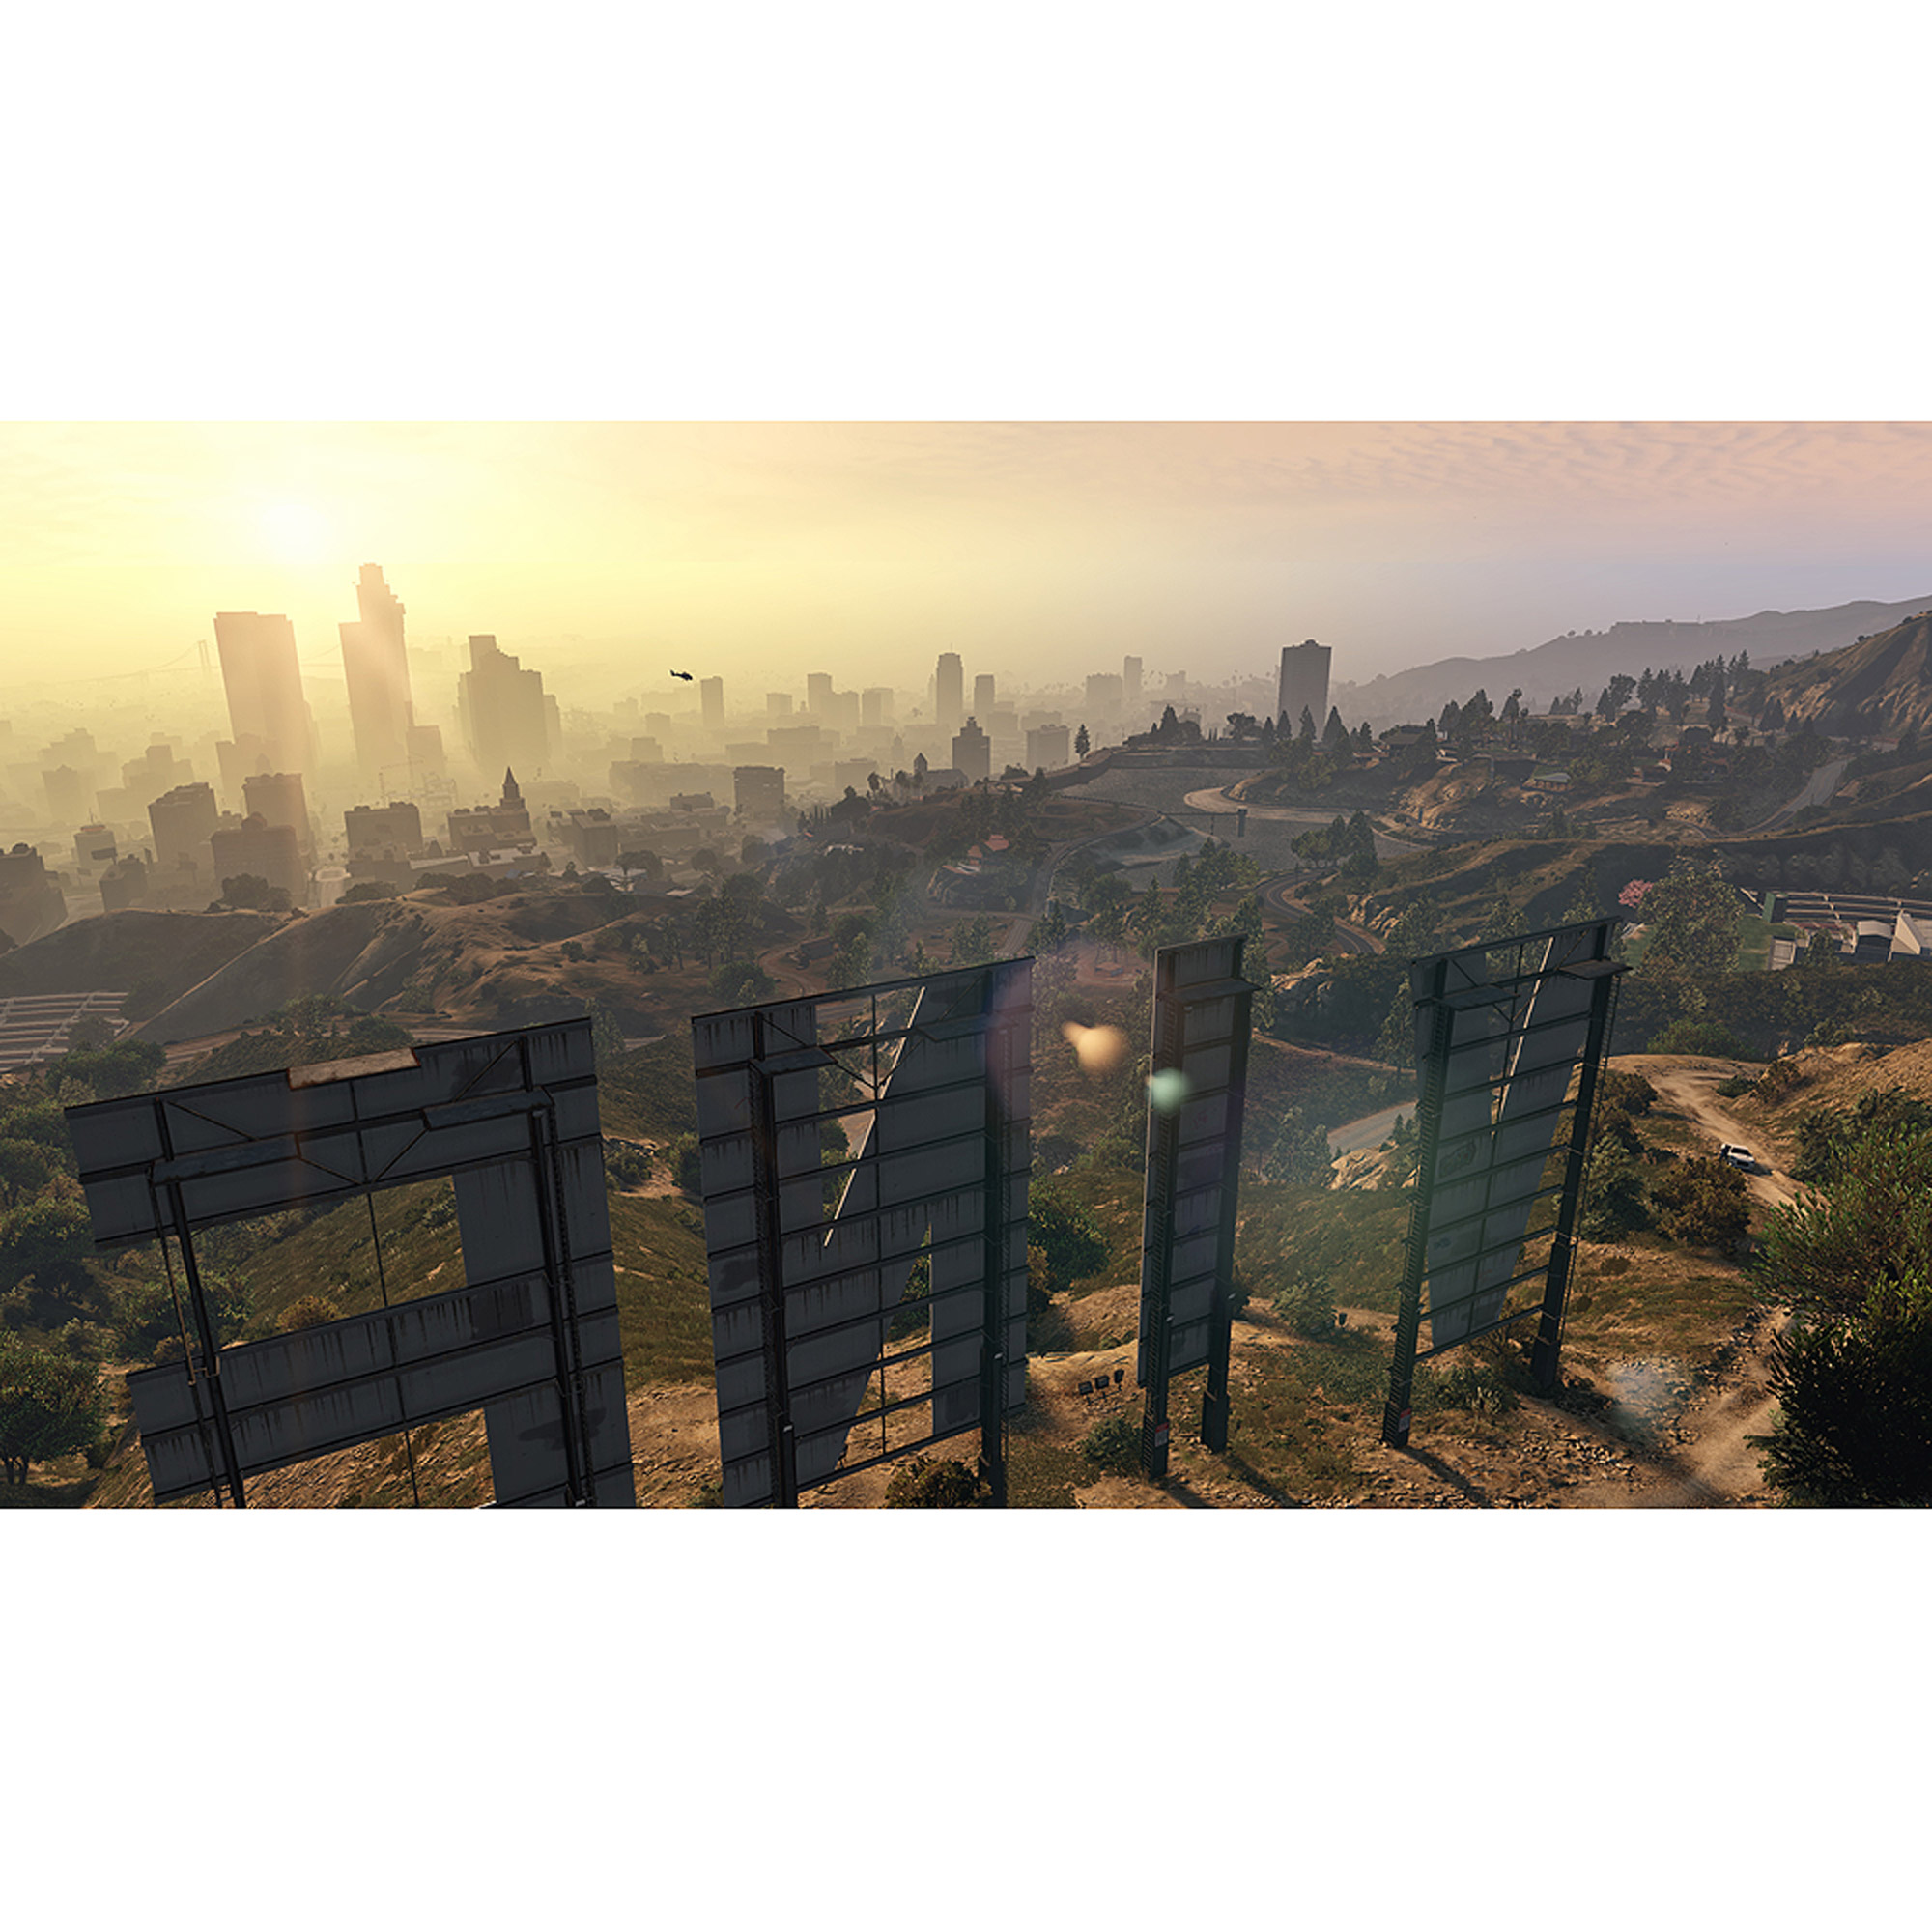 Grand Theft Auto V, Rockstar Games, PC - image 5 of 22